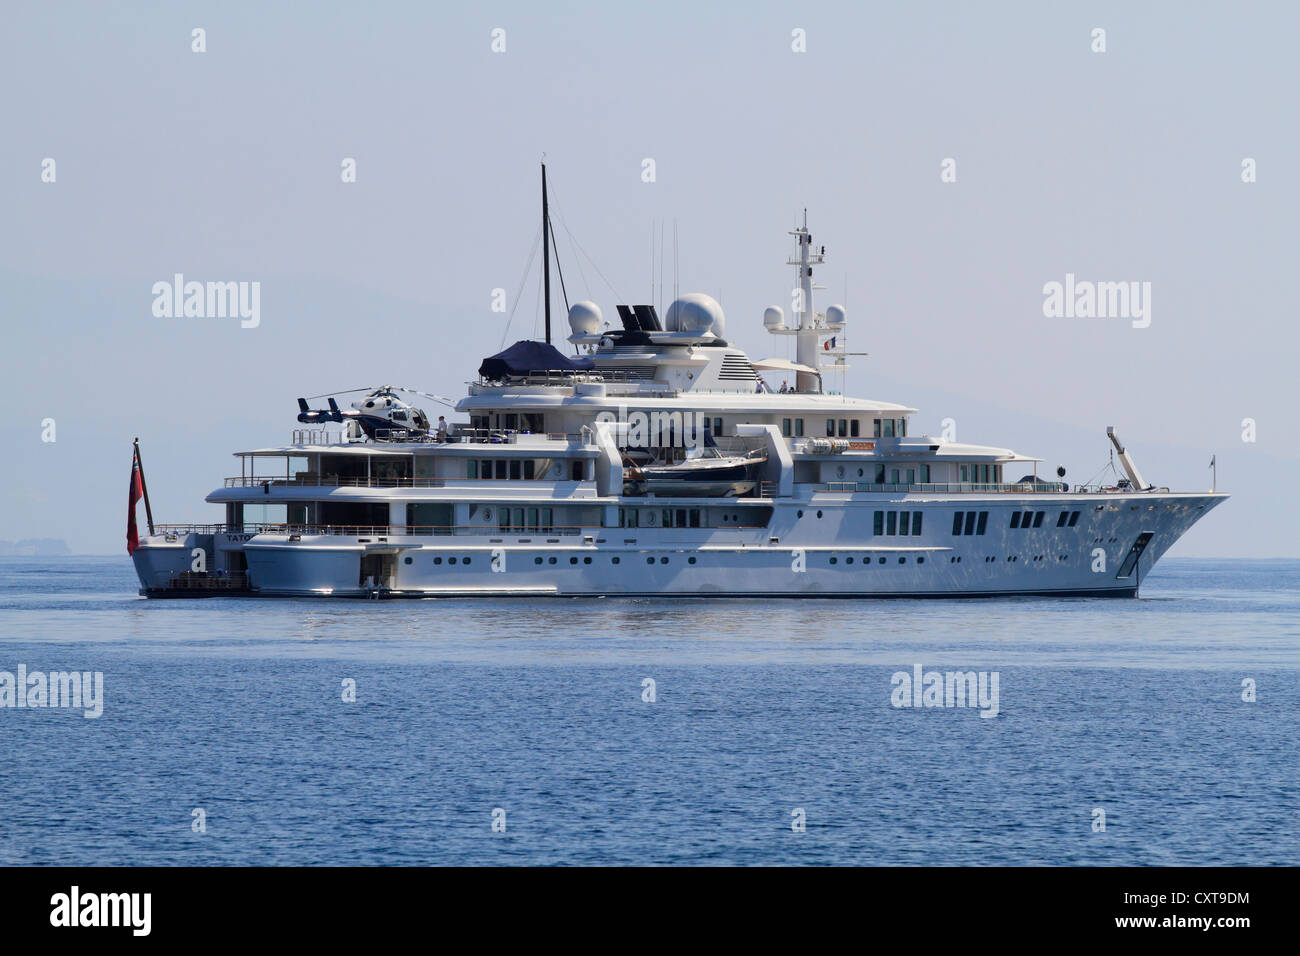 Motor Yacht Tatoosh, costruito dal cantiere navale Nobiskrug nel 2000, lunghezza 92.42 metri, a Cap Ferrat o Capo Ferrat, sulla Costa Azzurra Foto Stock